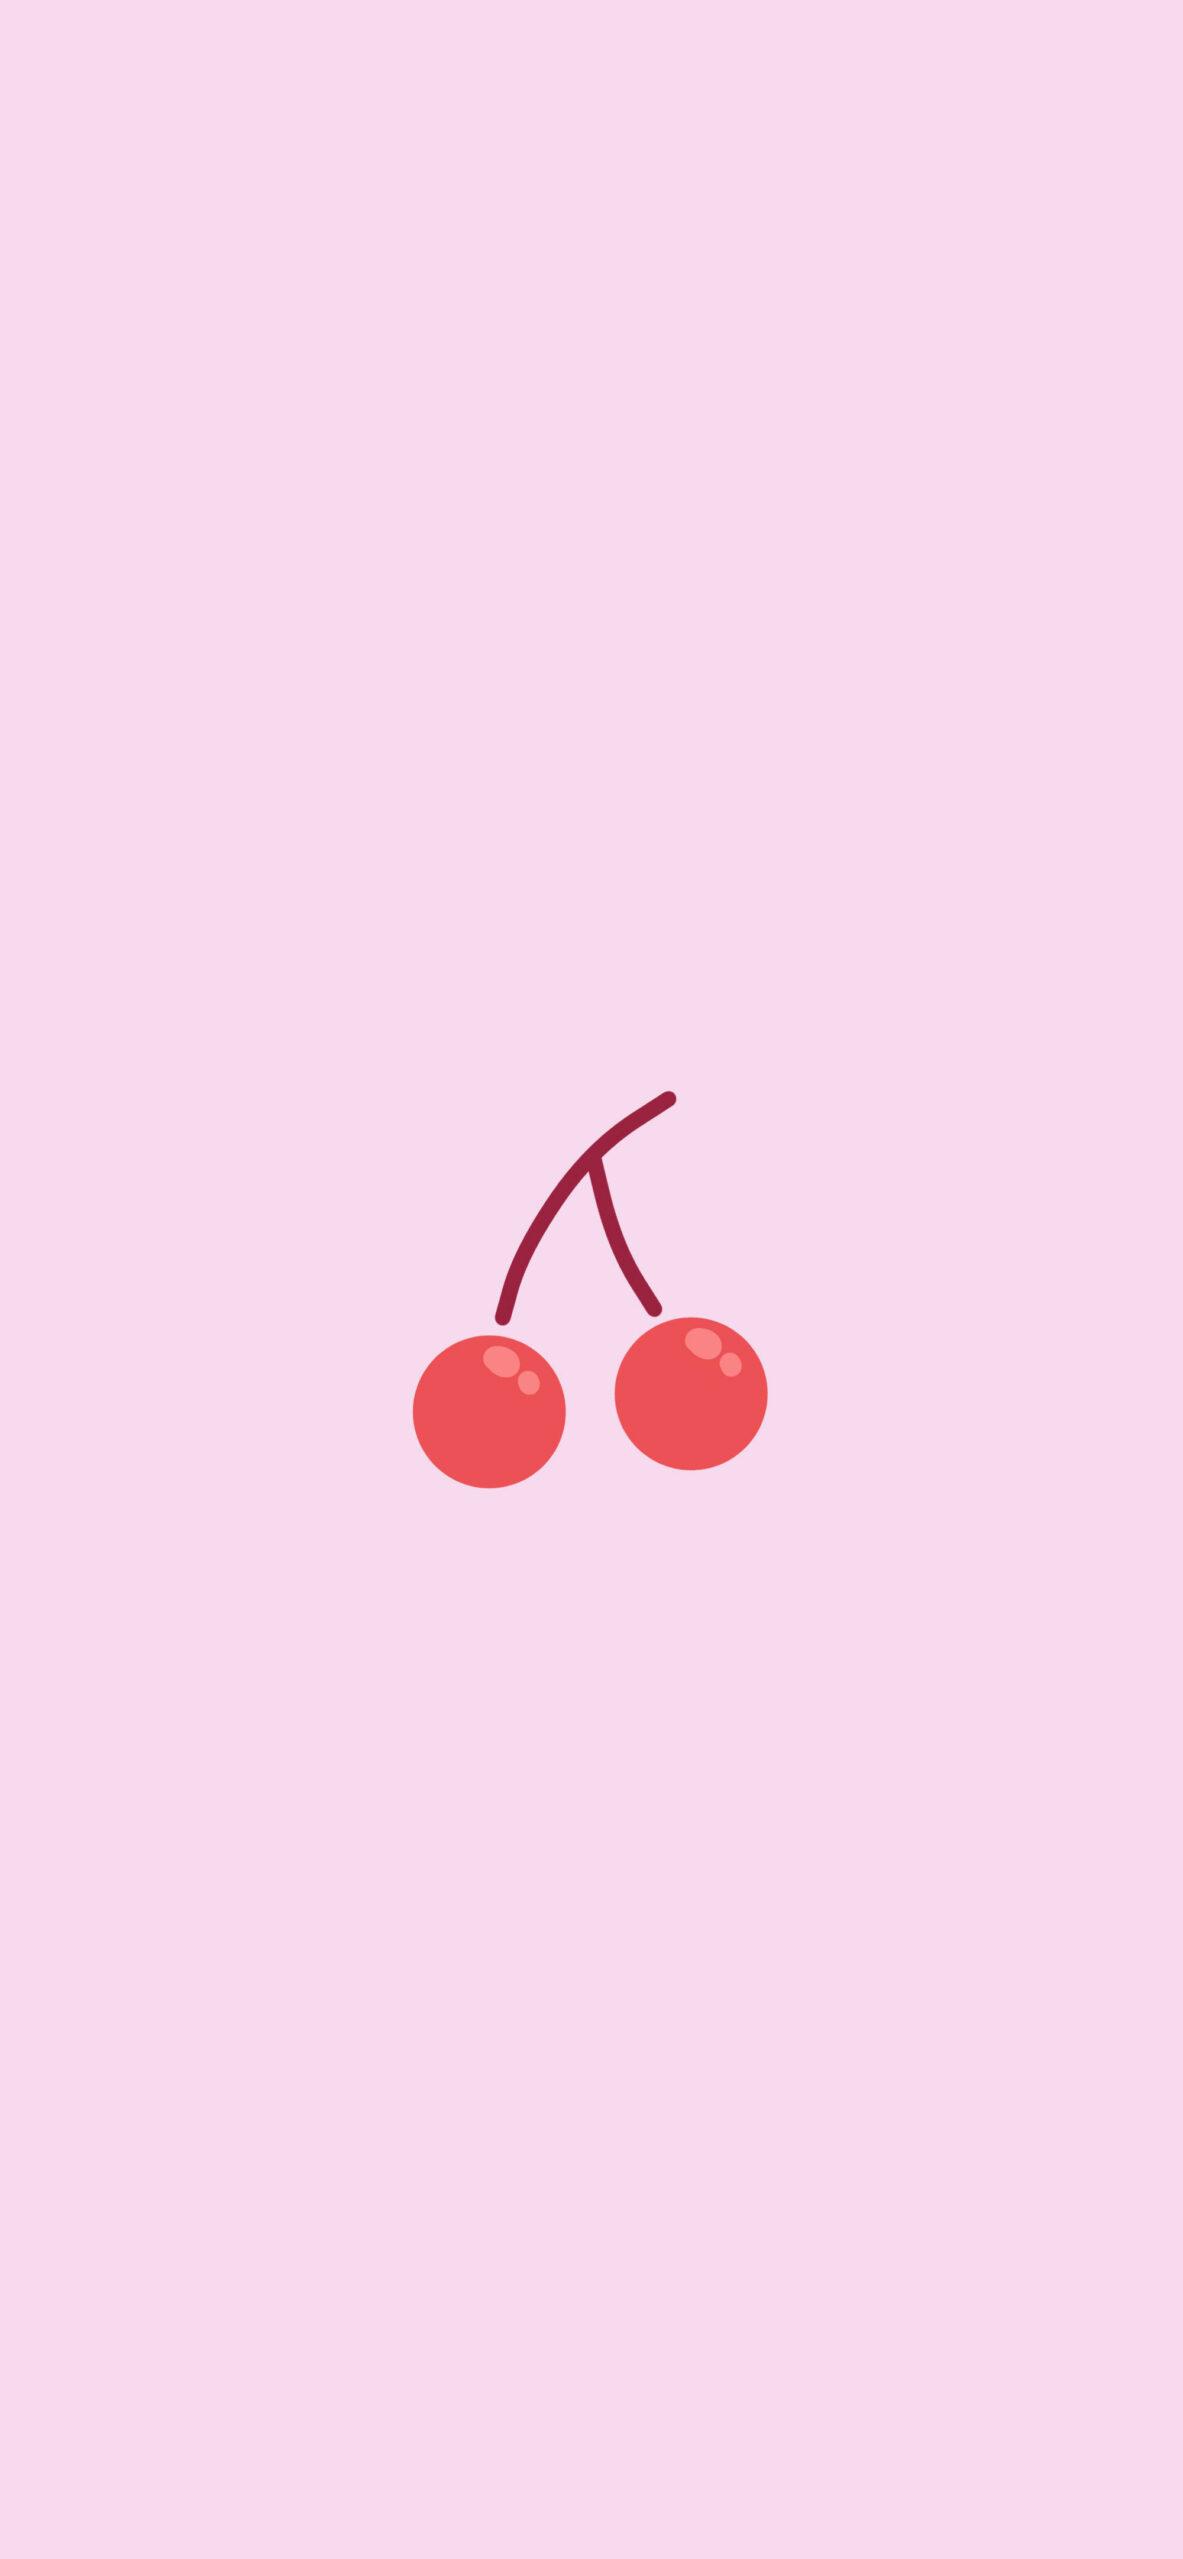 Cherries Pink Wallpaper Aesthetic For iPhone